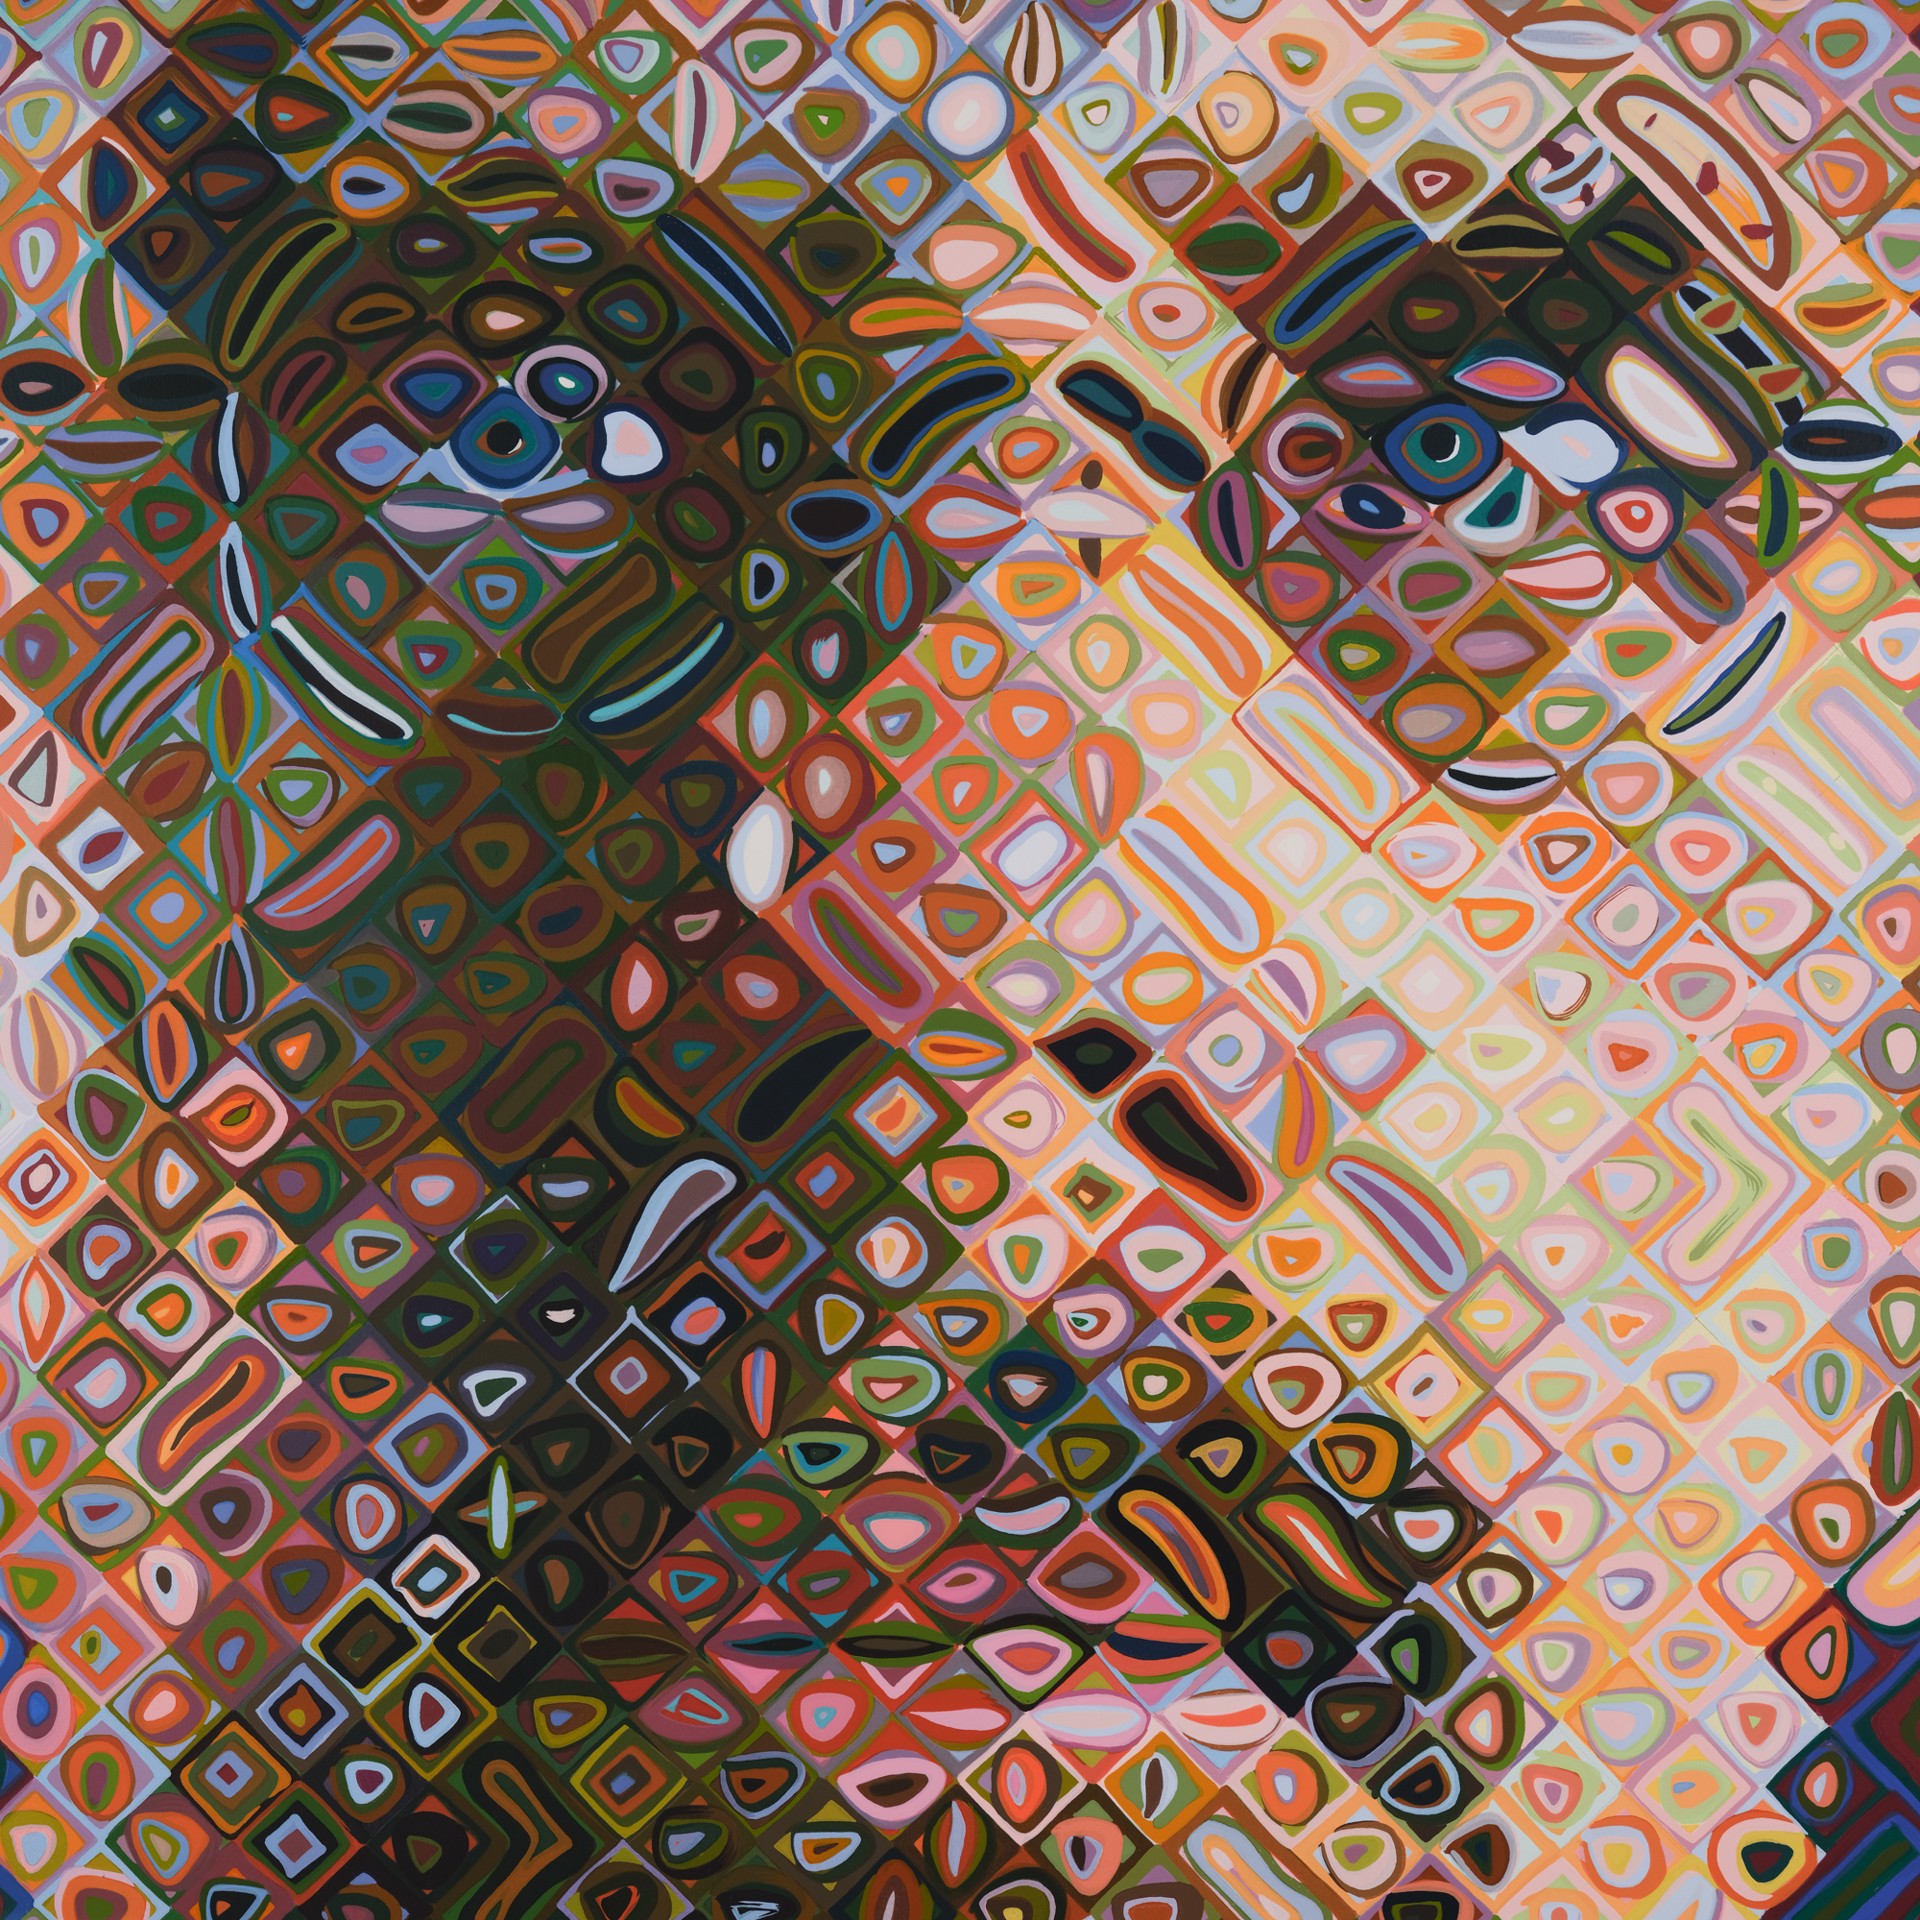 Self-Portrait by Chuck Close